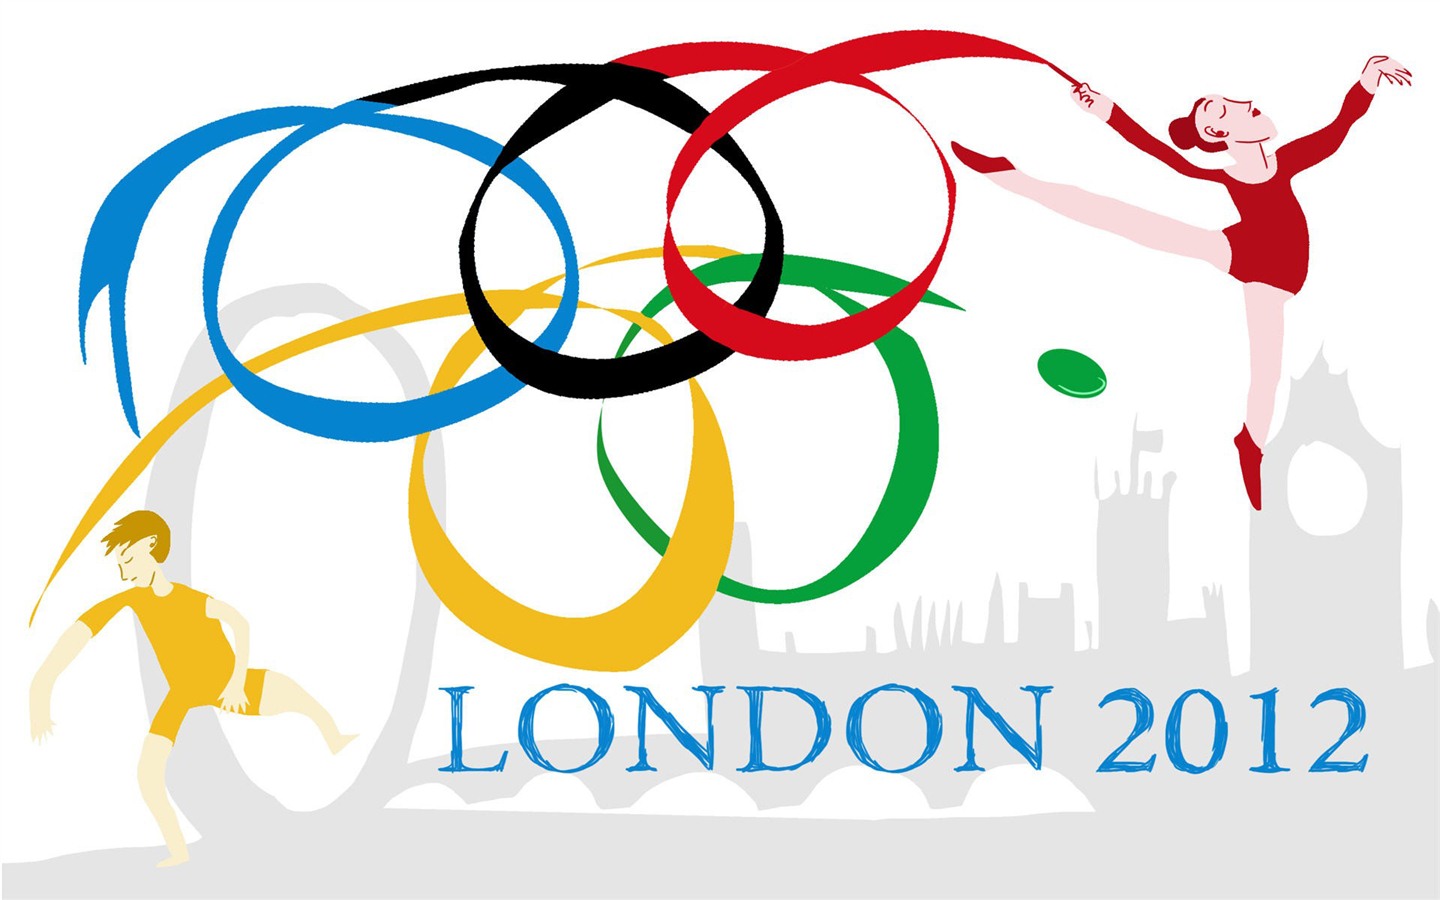 London 2012 Olympics theme wallpapers (2) #16 - 1440x900